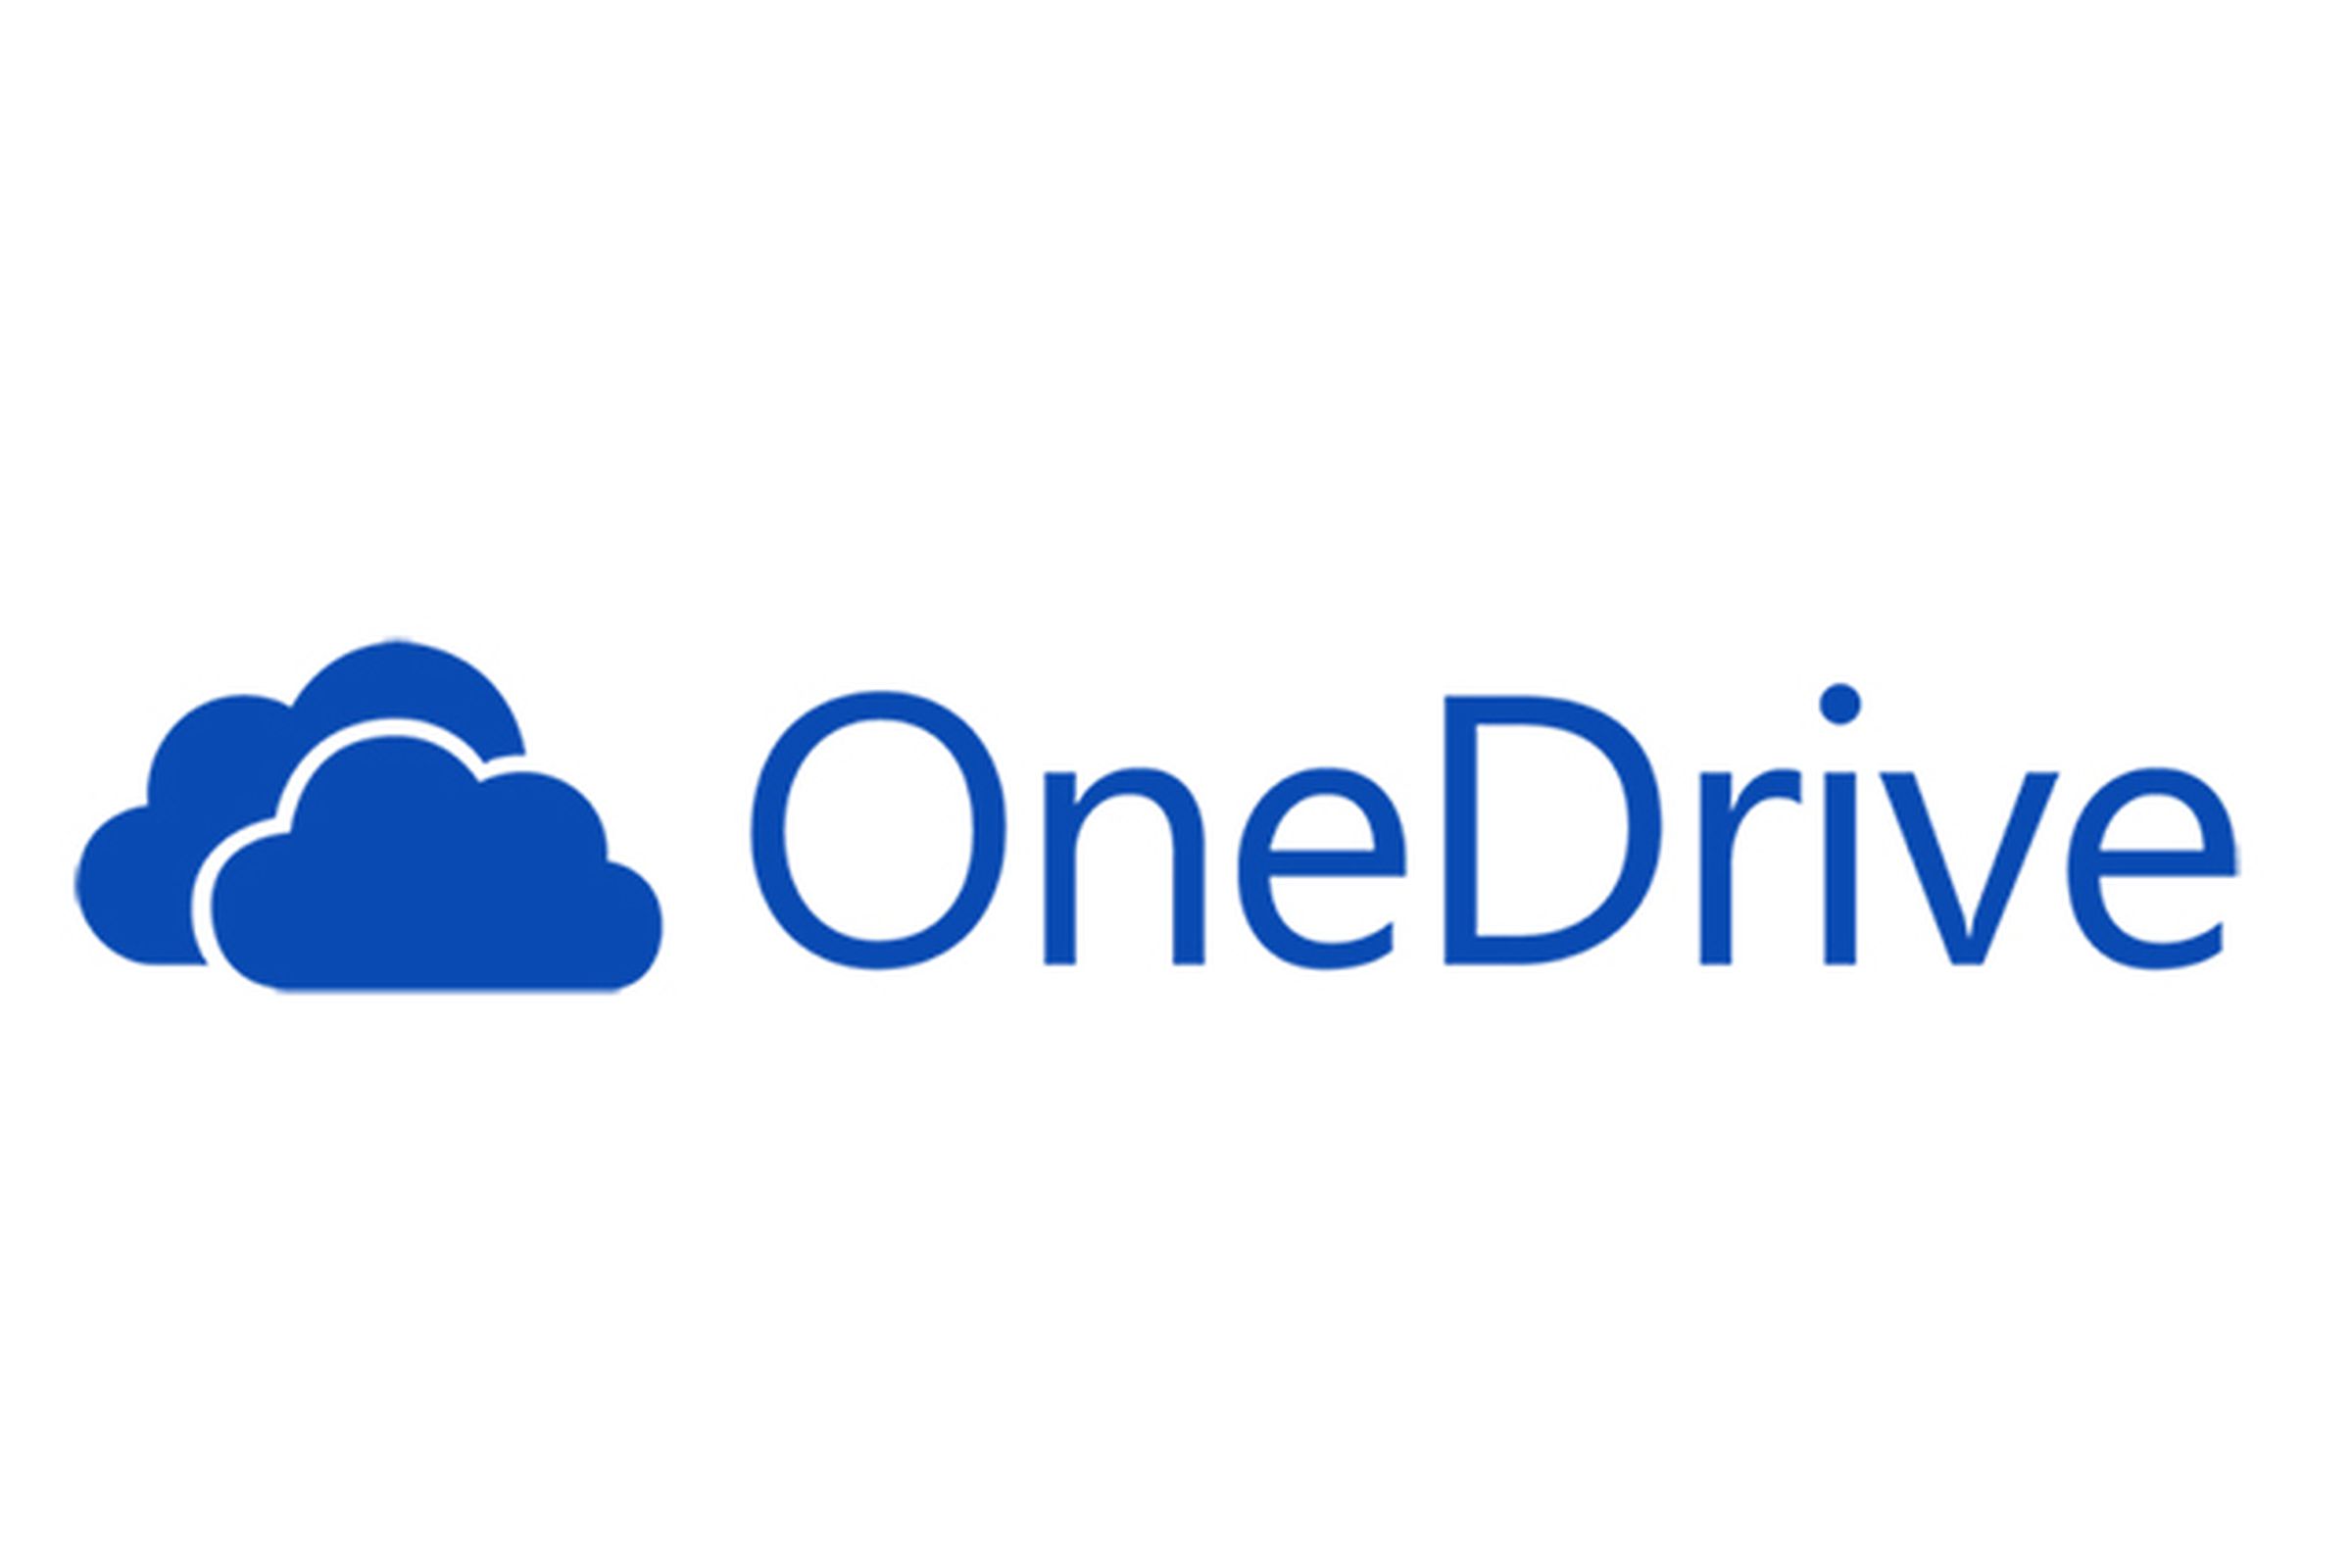 Microsoft OneDrive logo stock